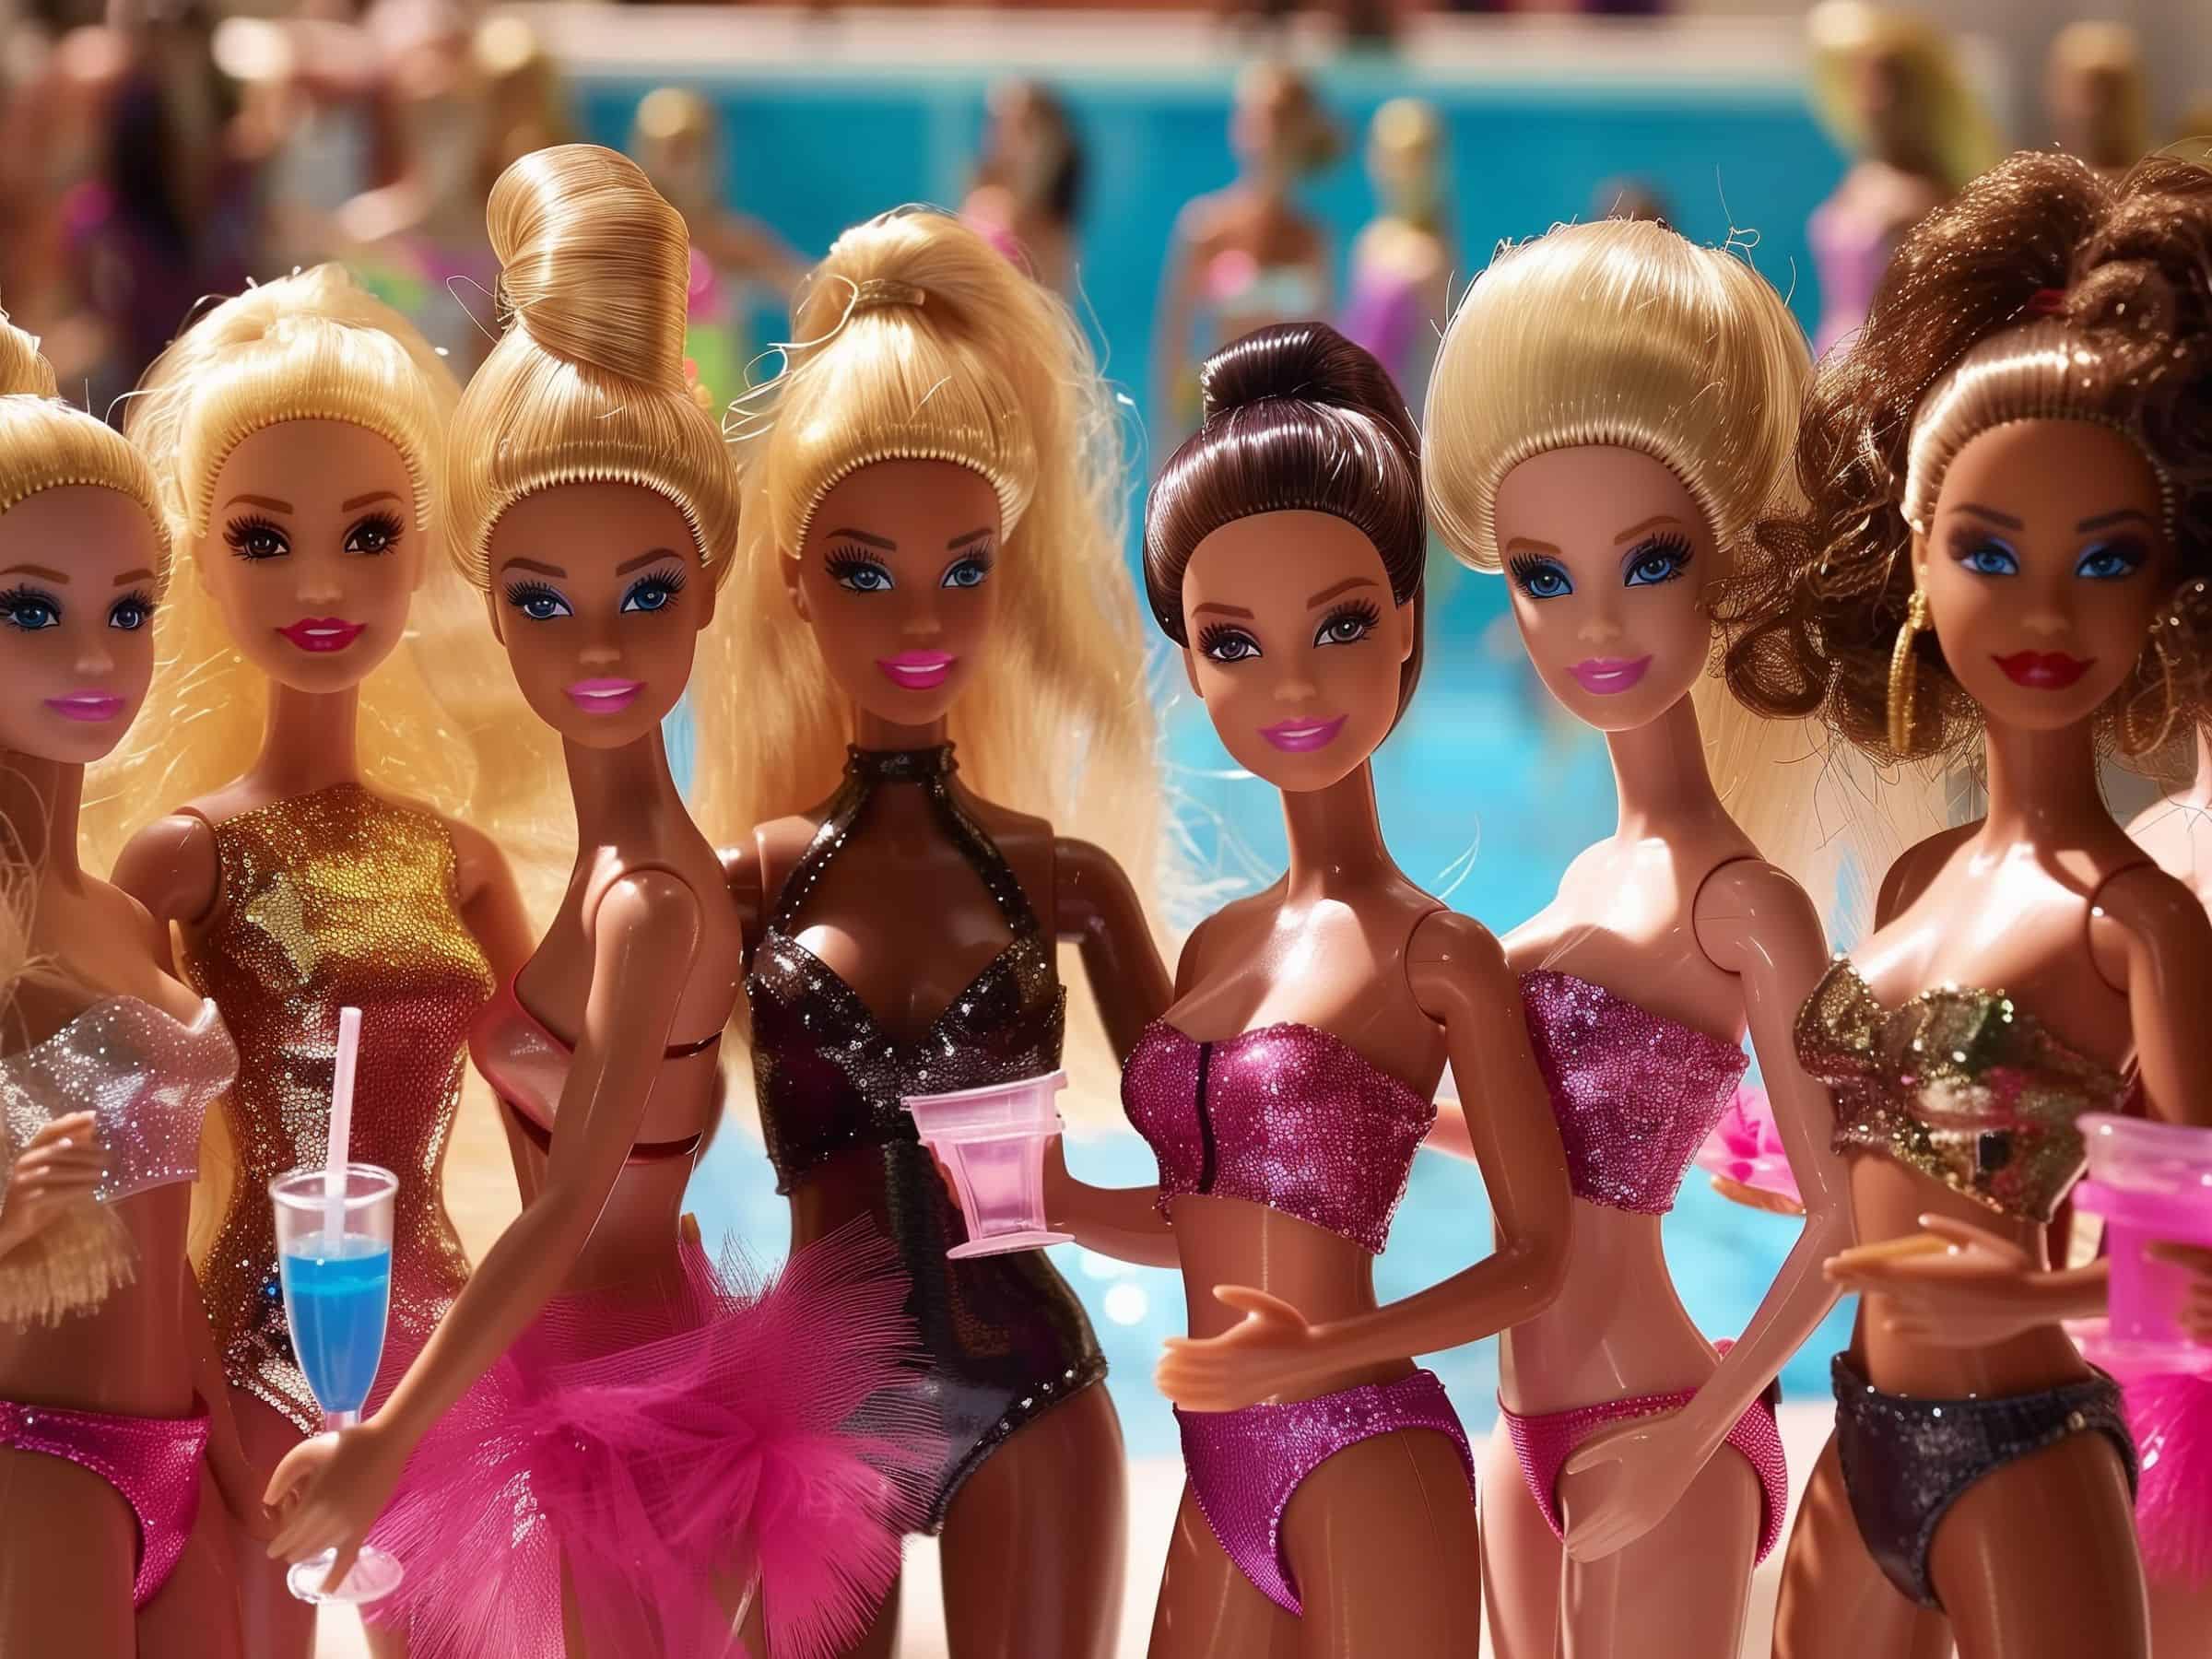 Barbie's friend around the pool